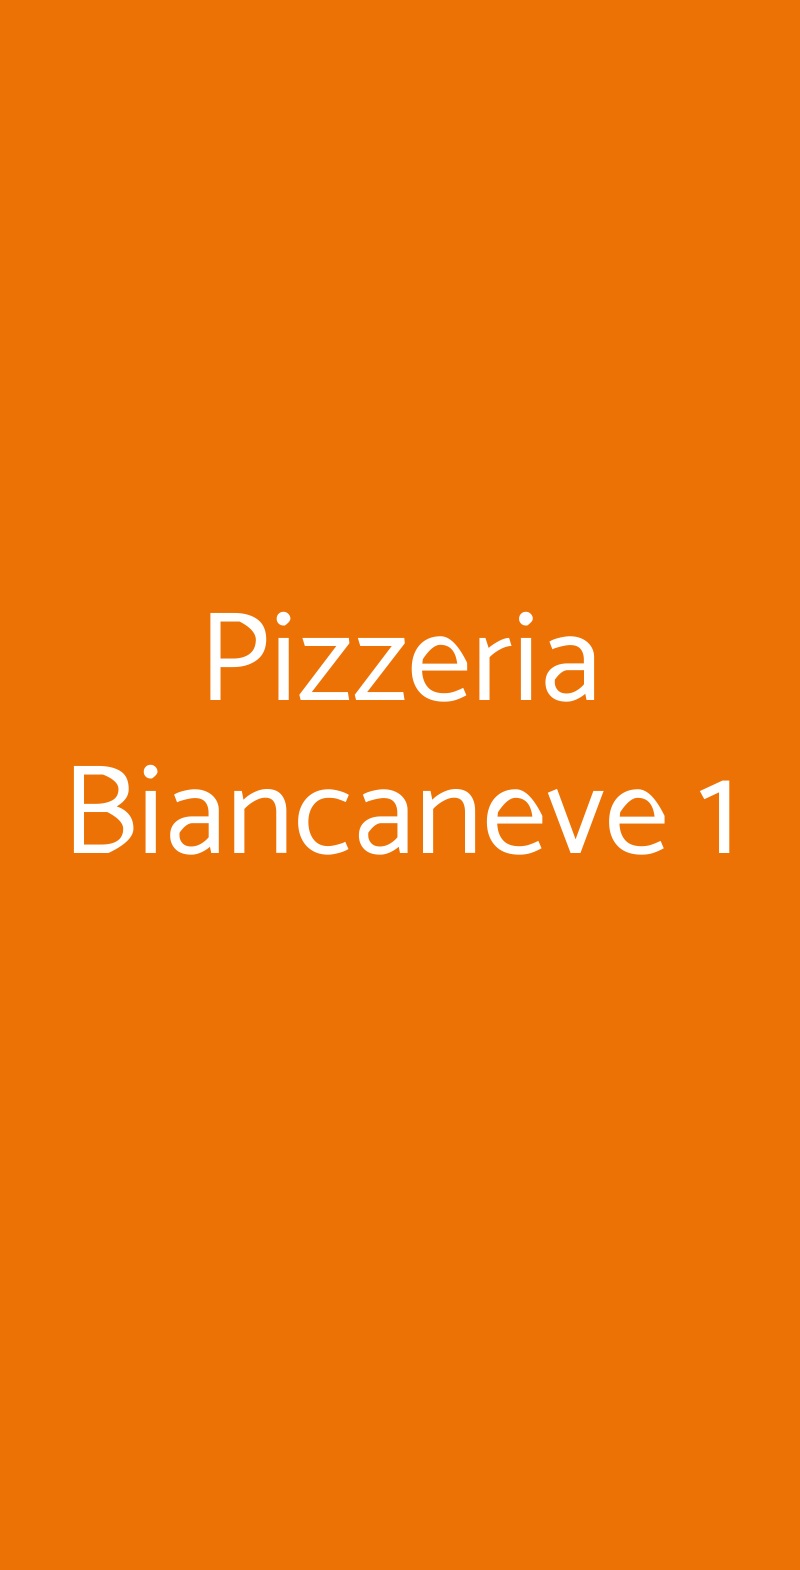 Pizzeria Biancaneve 1 Firenze menù 1 pagina